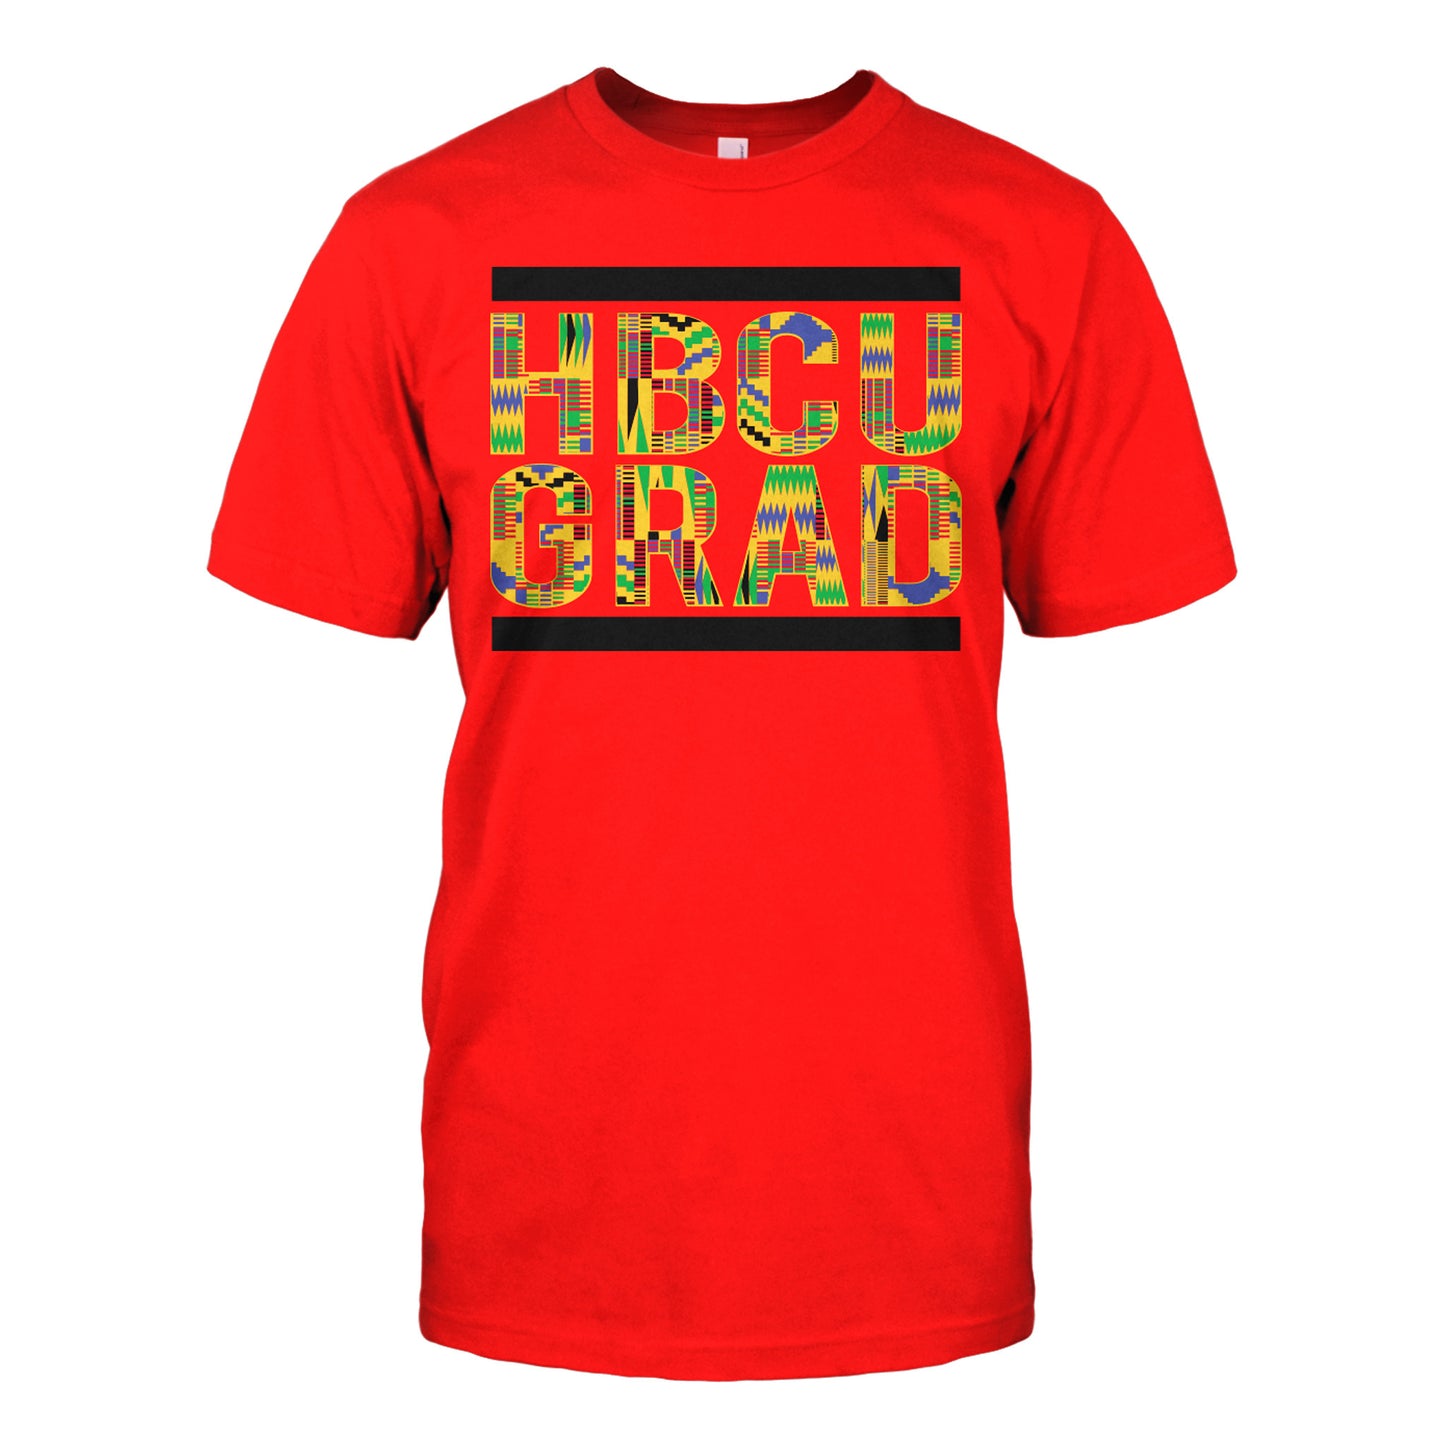 HBCU GRAD | Kente Cloth 2 | Tshirt - Red